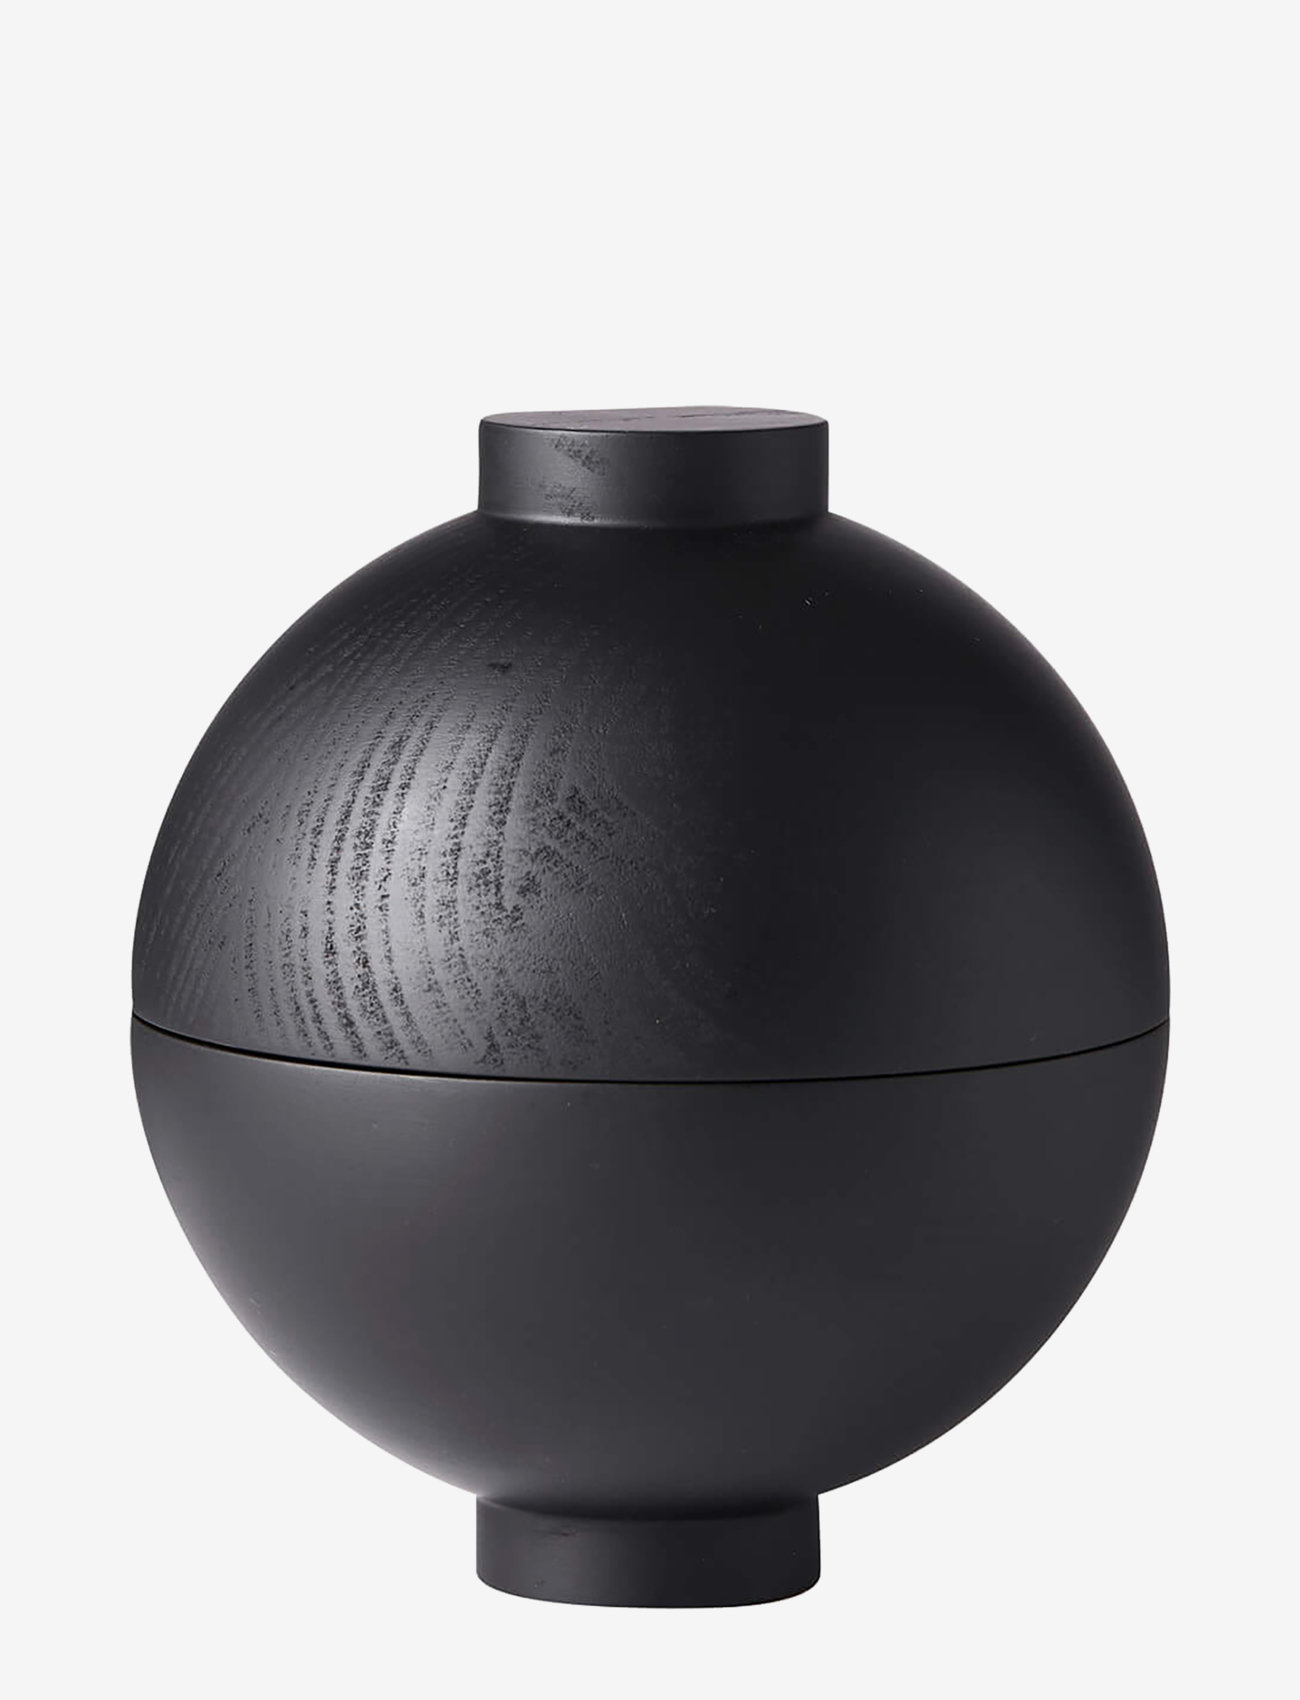 Kristina Dam Studio - XL Wooden Sphere - black painted wood - 0